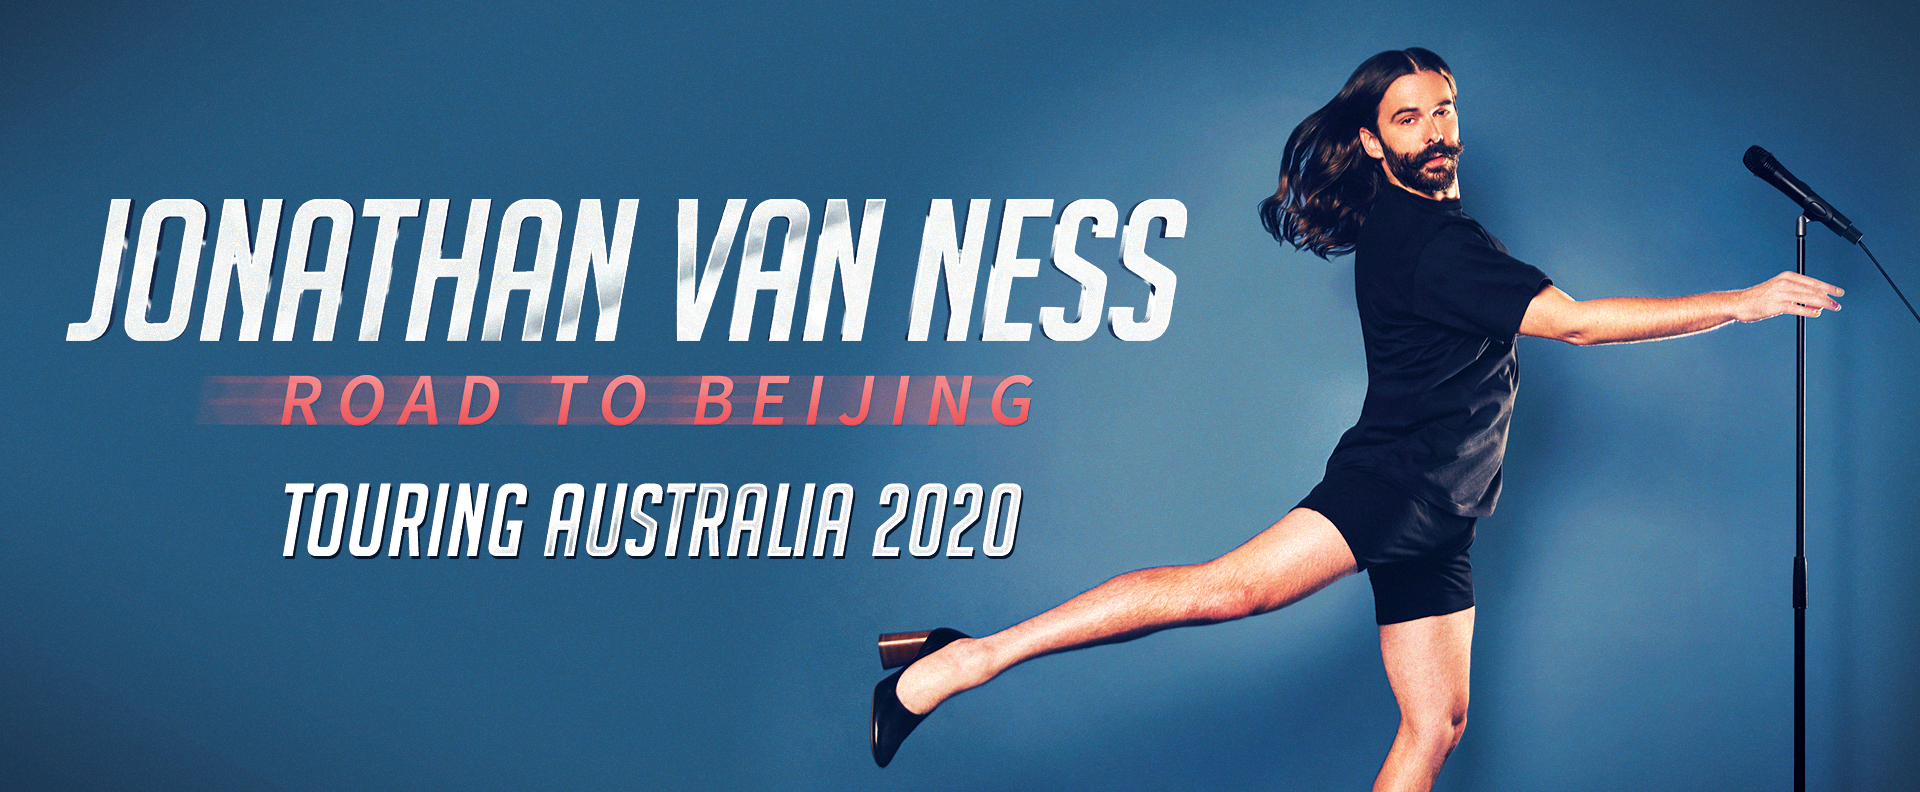 Jonathan Van Ness australia tour